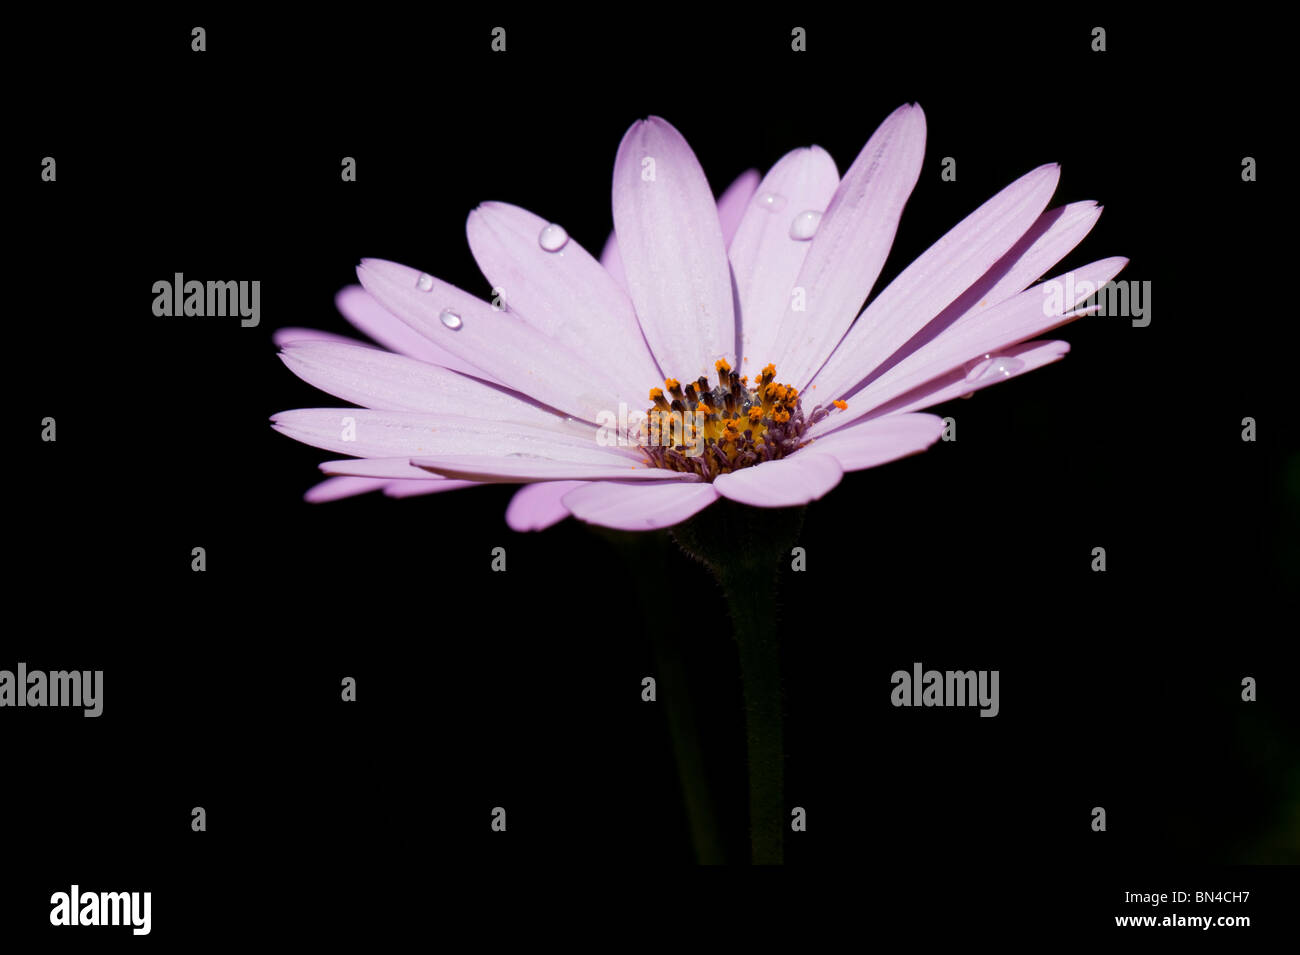 A single Osteospermum jucundum lilac flower against a deep shadow background Stock Photo